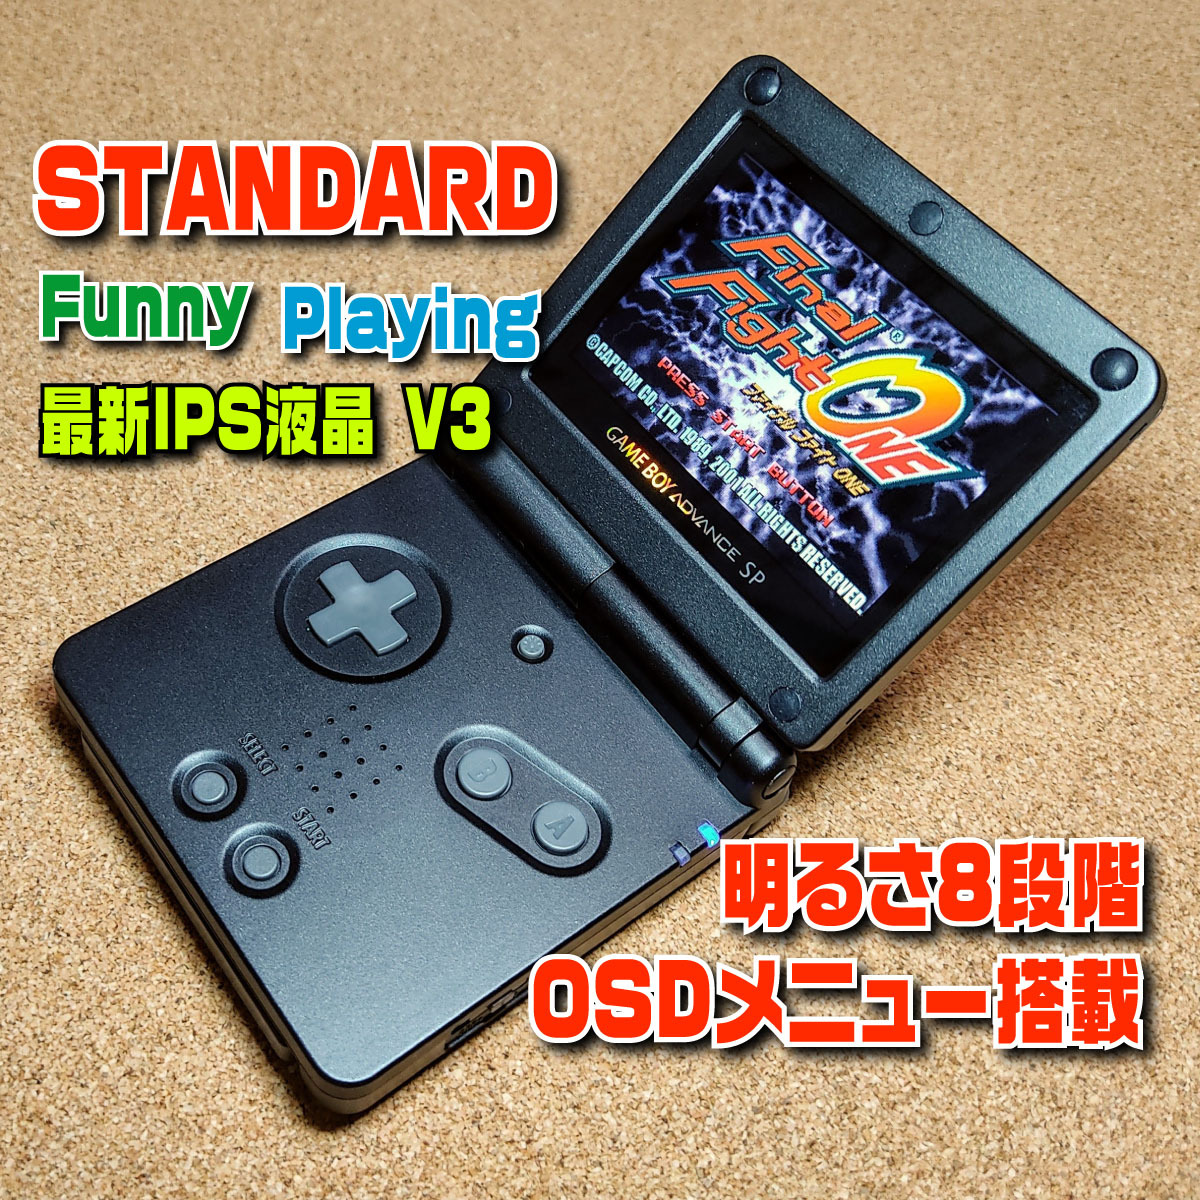 [STANDARD]IPS backlight liquid crystal V3+ brightness 8 -step +OSD menu custom Game Boy Advance SP body glass screen GBA